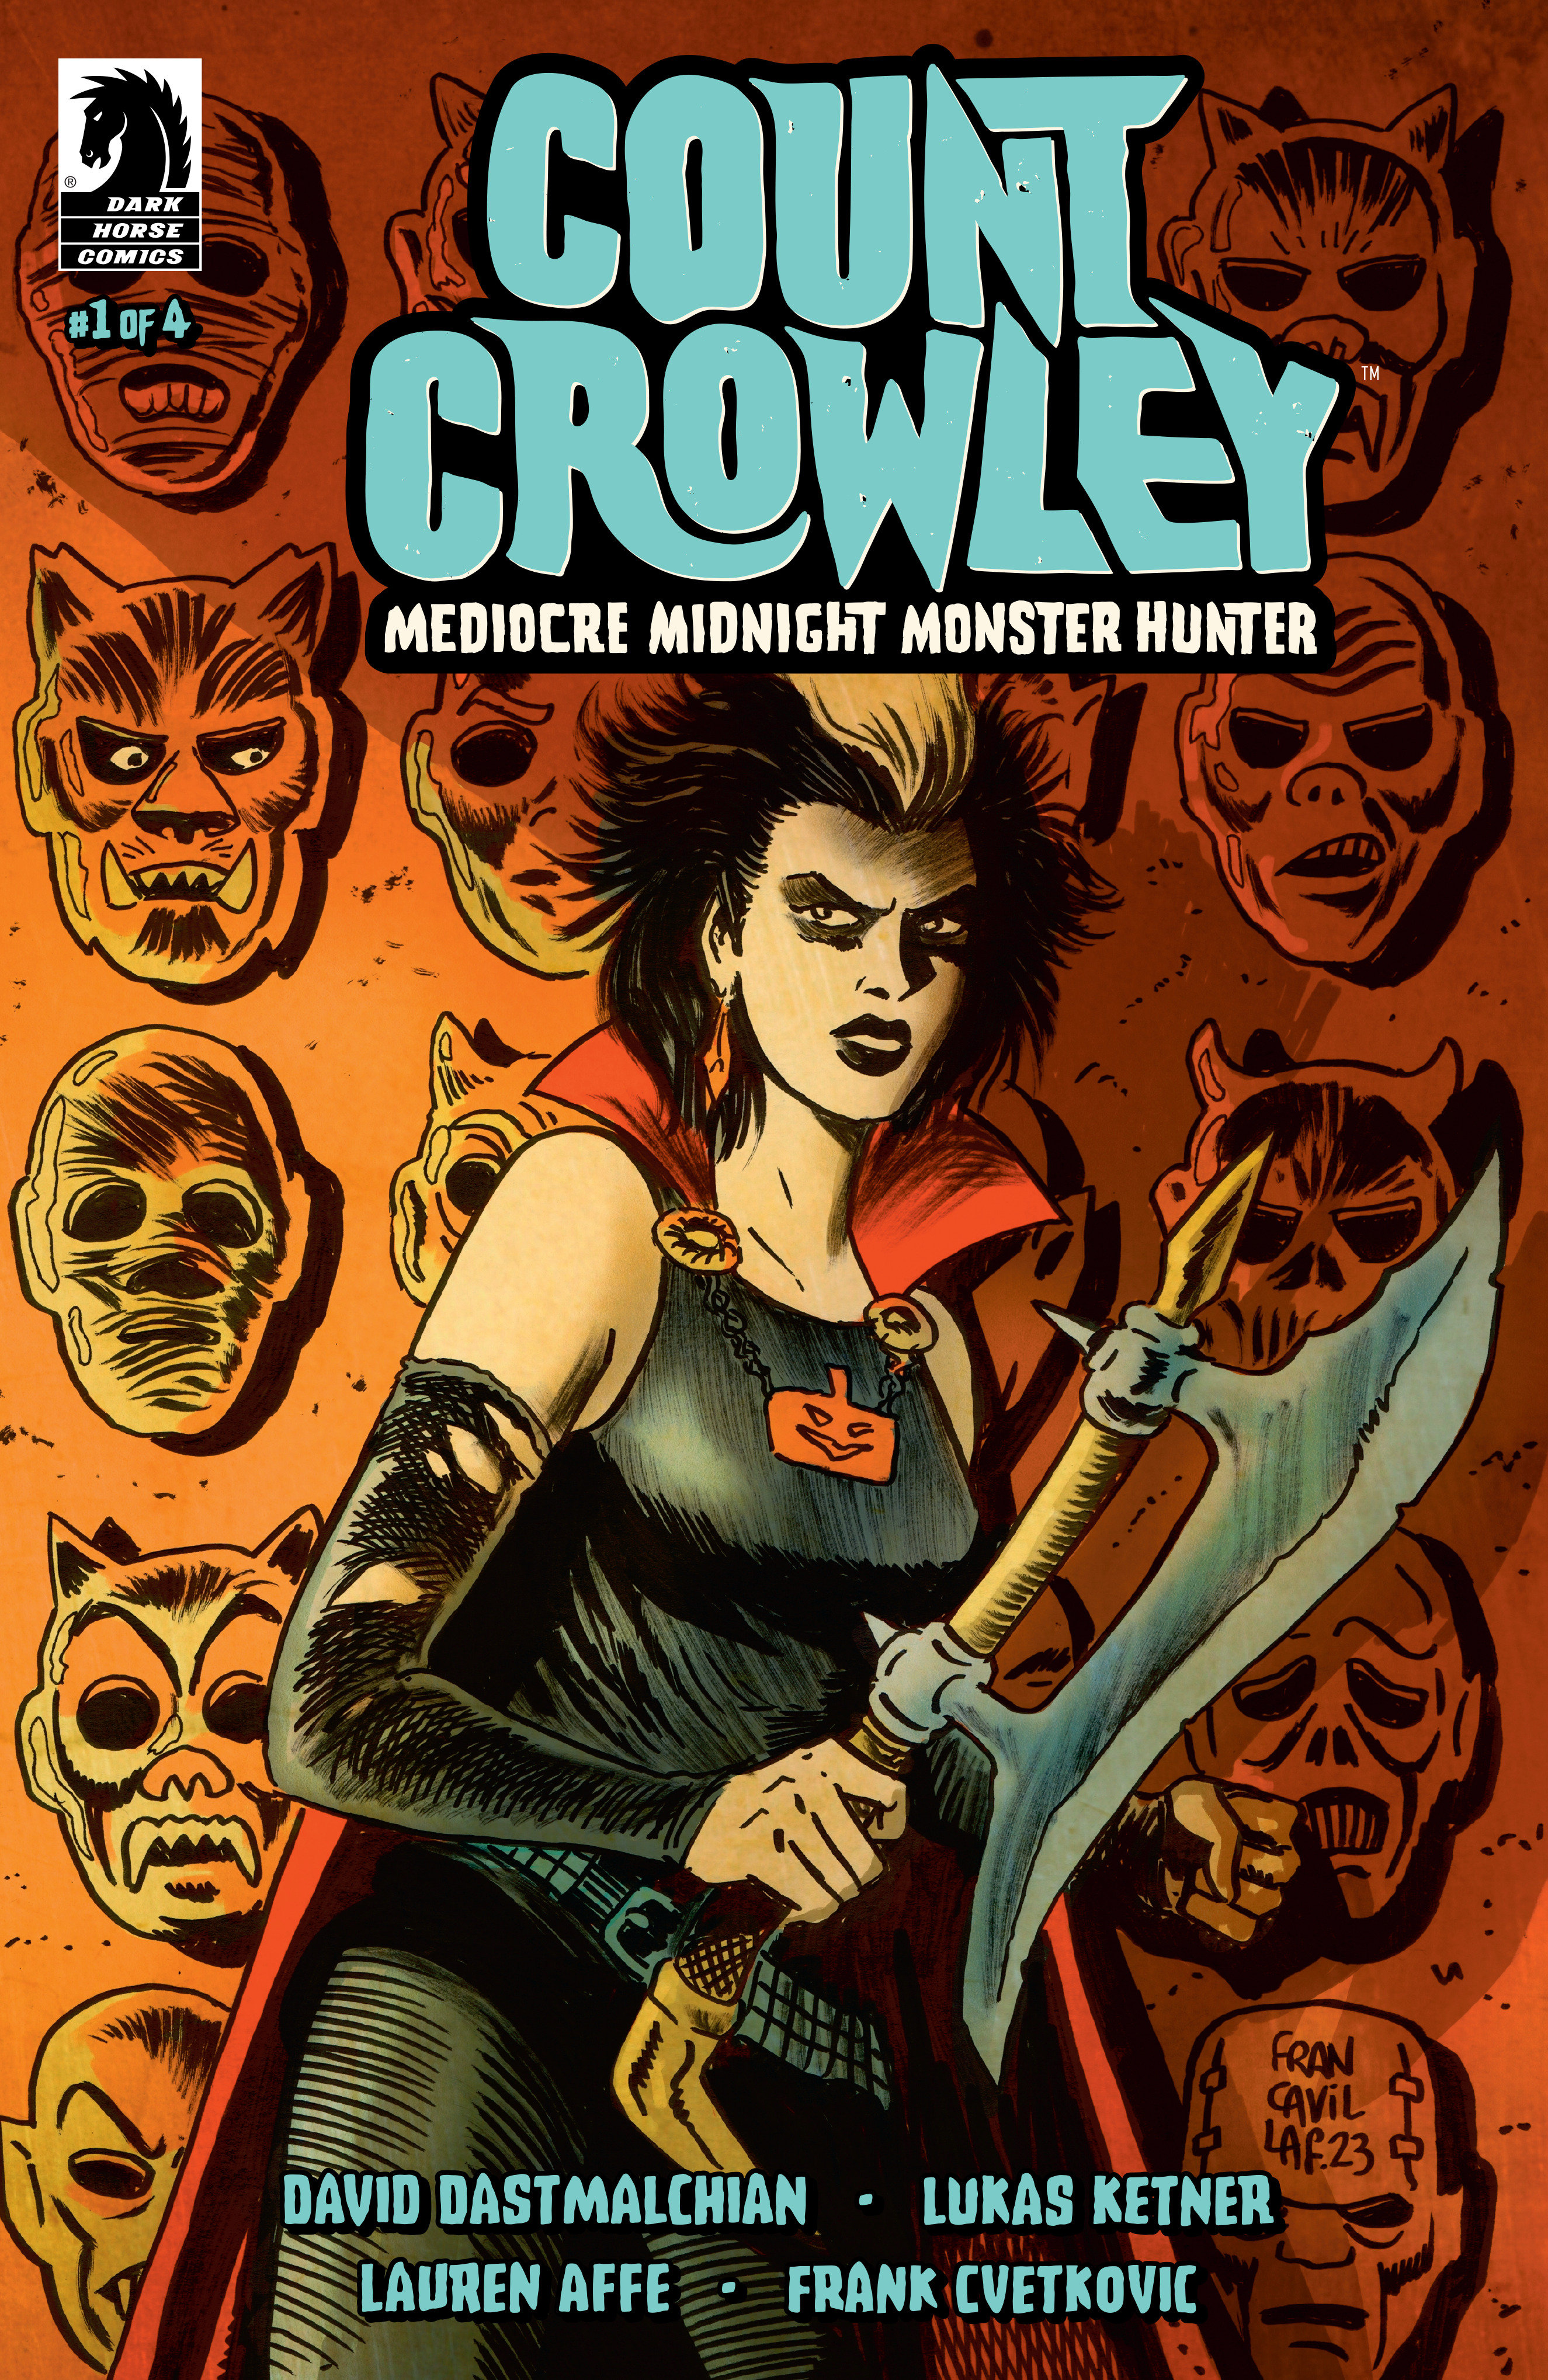 Count Crowley: Mediocre Midnight Monster Hunter #1 Cover B (Francesco Francavilla)